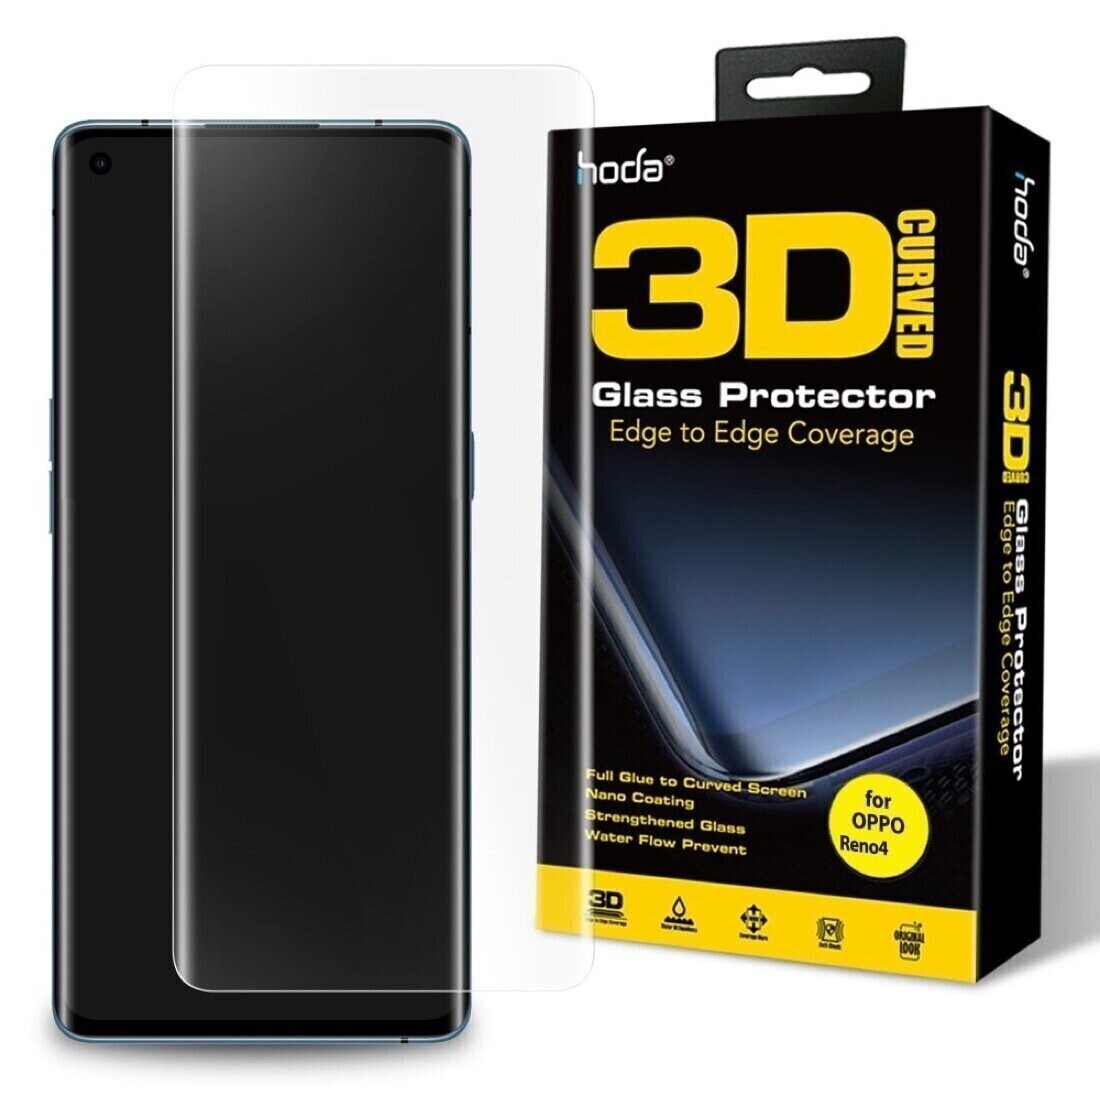 Hoda Oppo Reno4 Tempered Glass, 3D UV Case Friendly